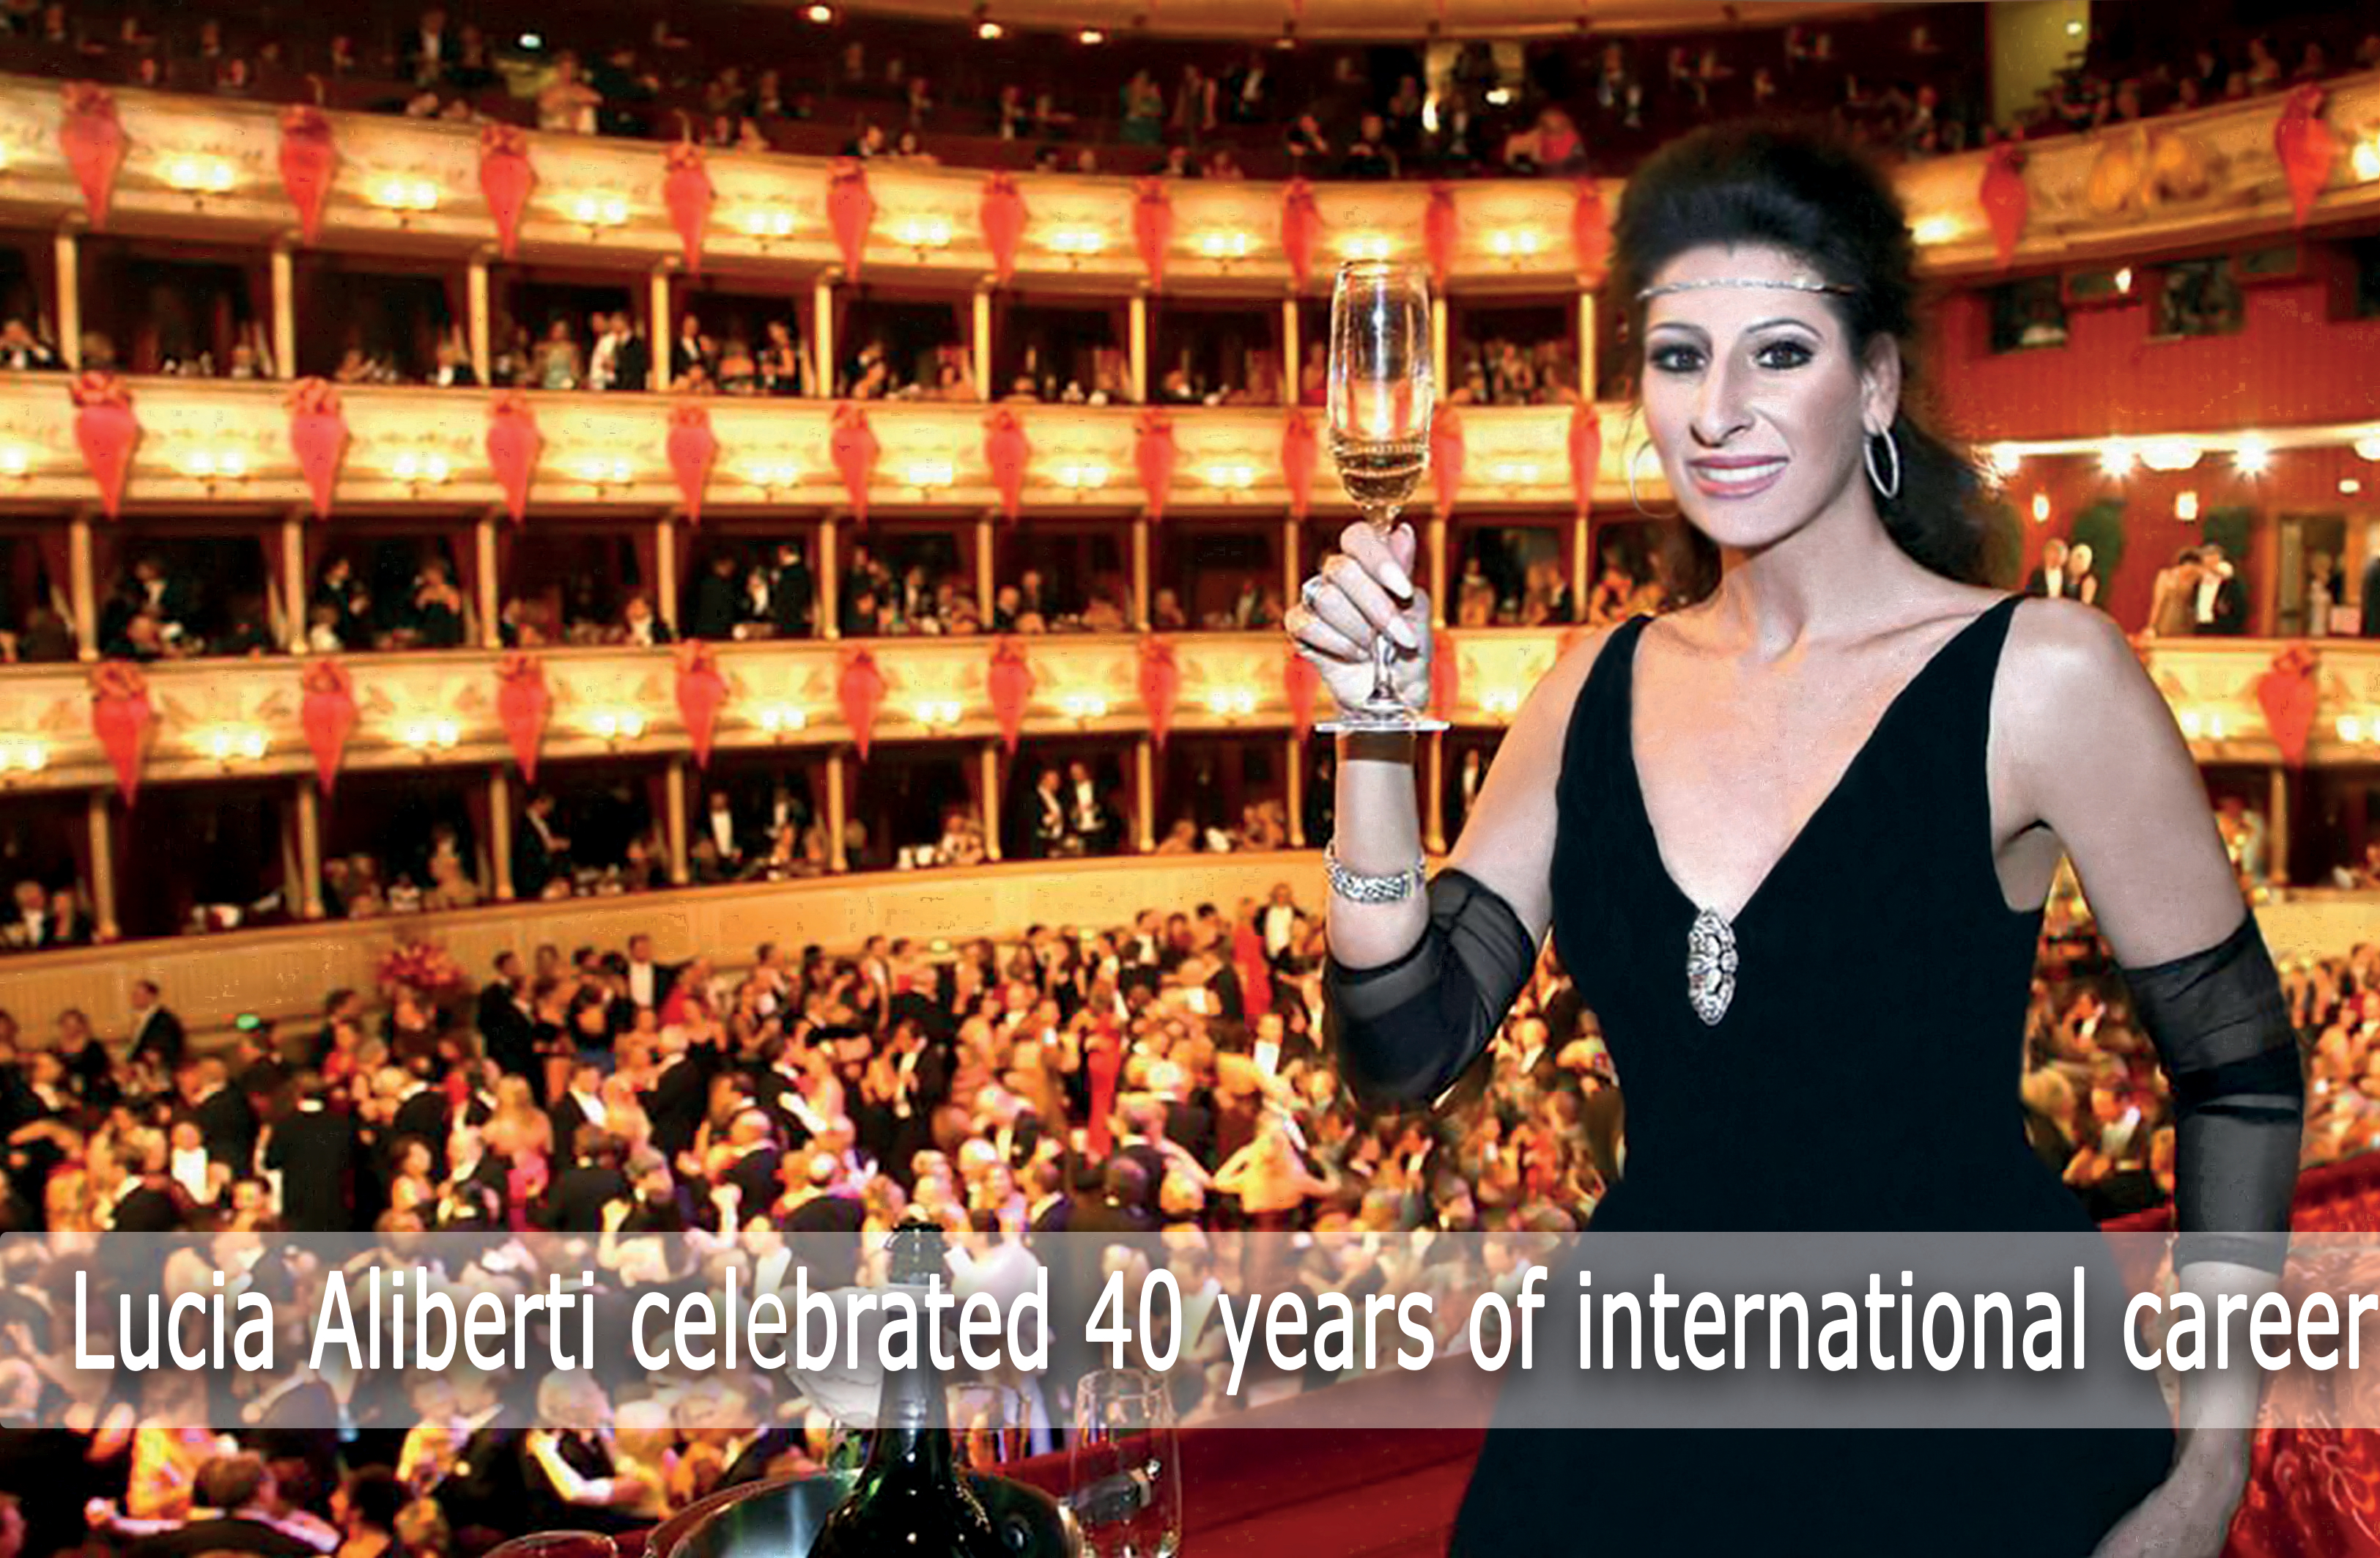 Lucia Aliberti⭐️Celebrated 40 years ⭐️of International Career⭐️Wiener Staatsoper⭐️Vienna⚘:http://www.luciaaliberti.it #luciaaliberti #celebrated40years #ofinternationalcareer #wienerstaatsoper #vienna